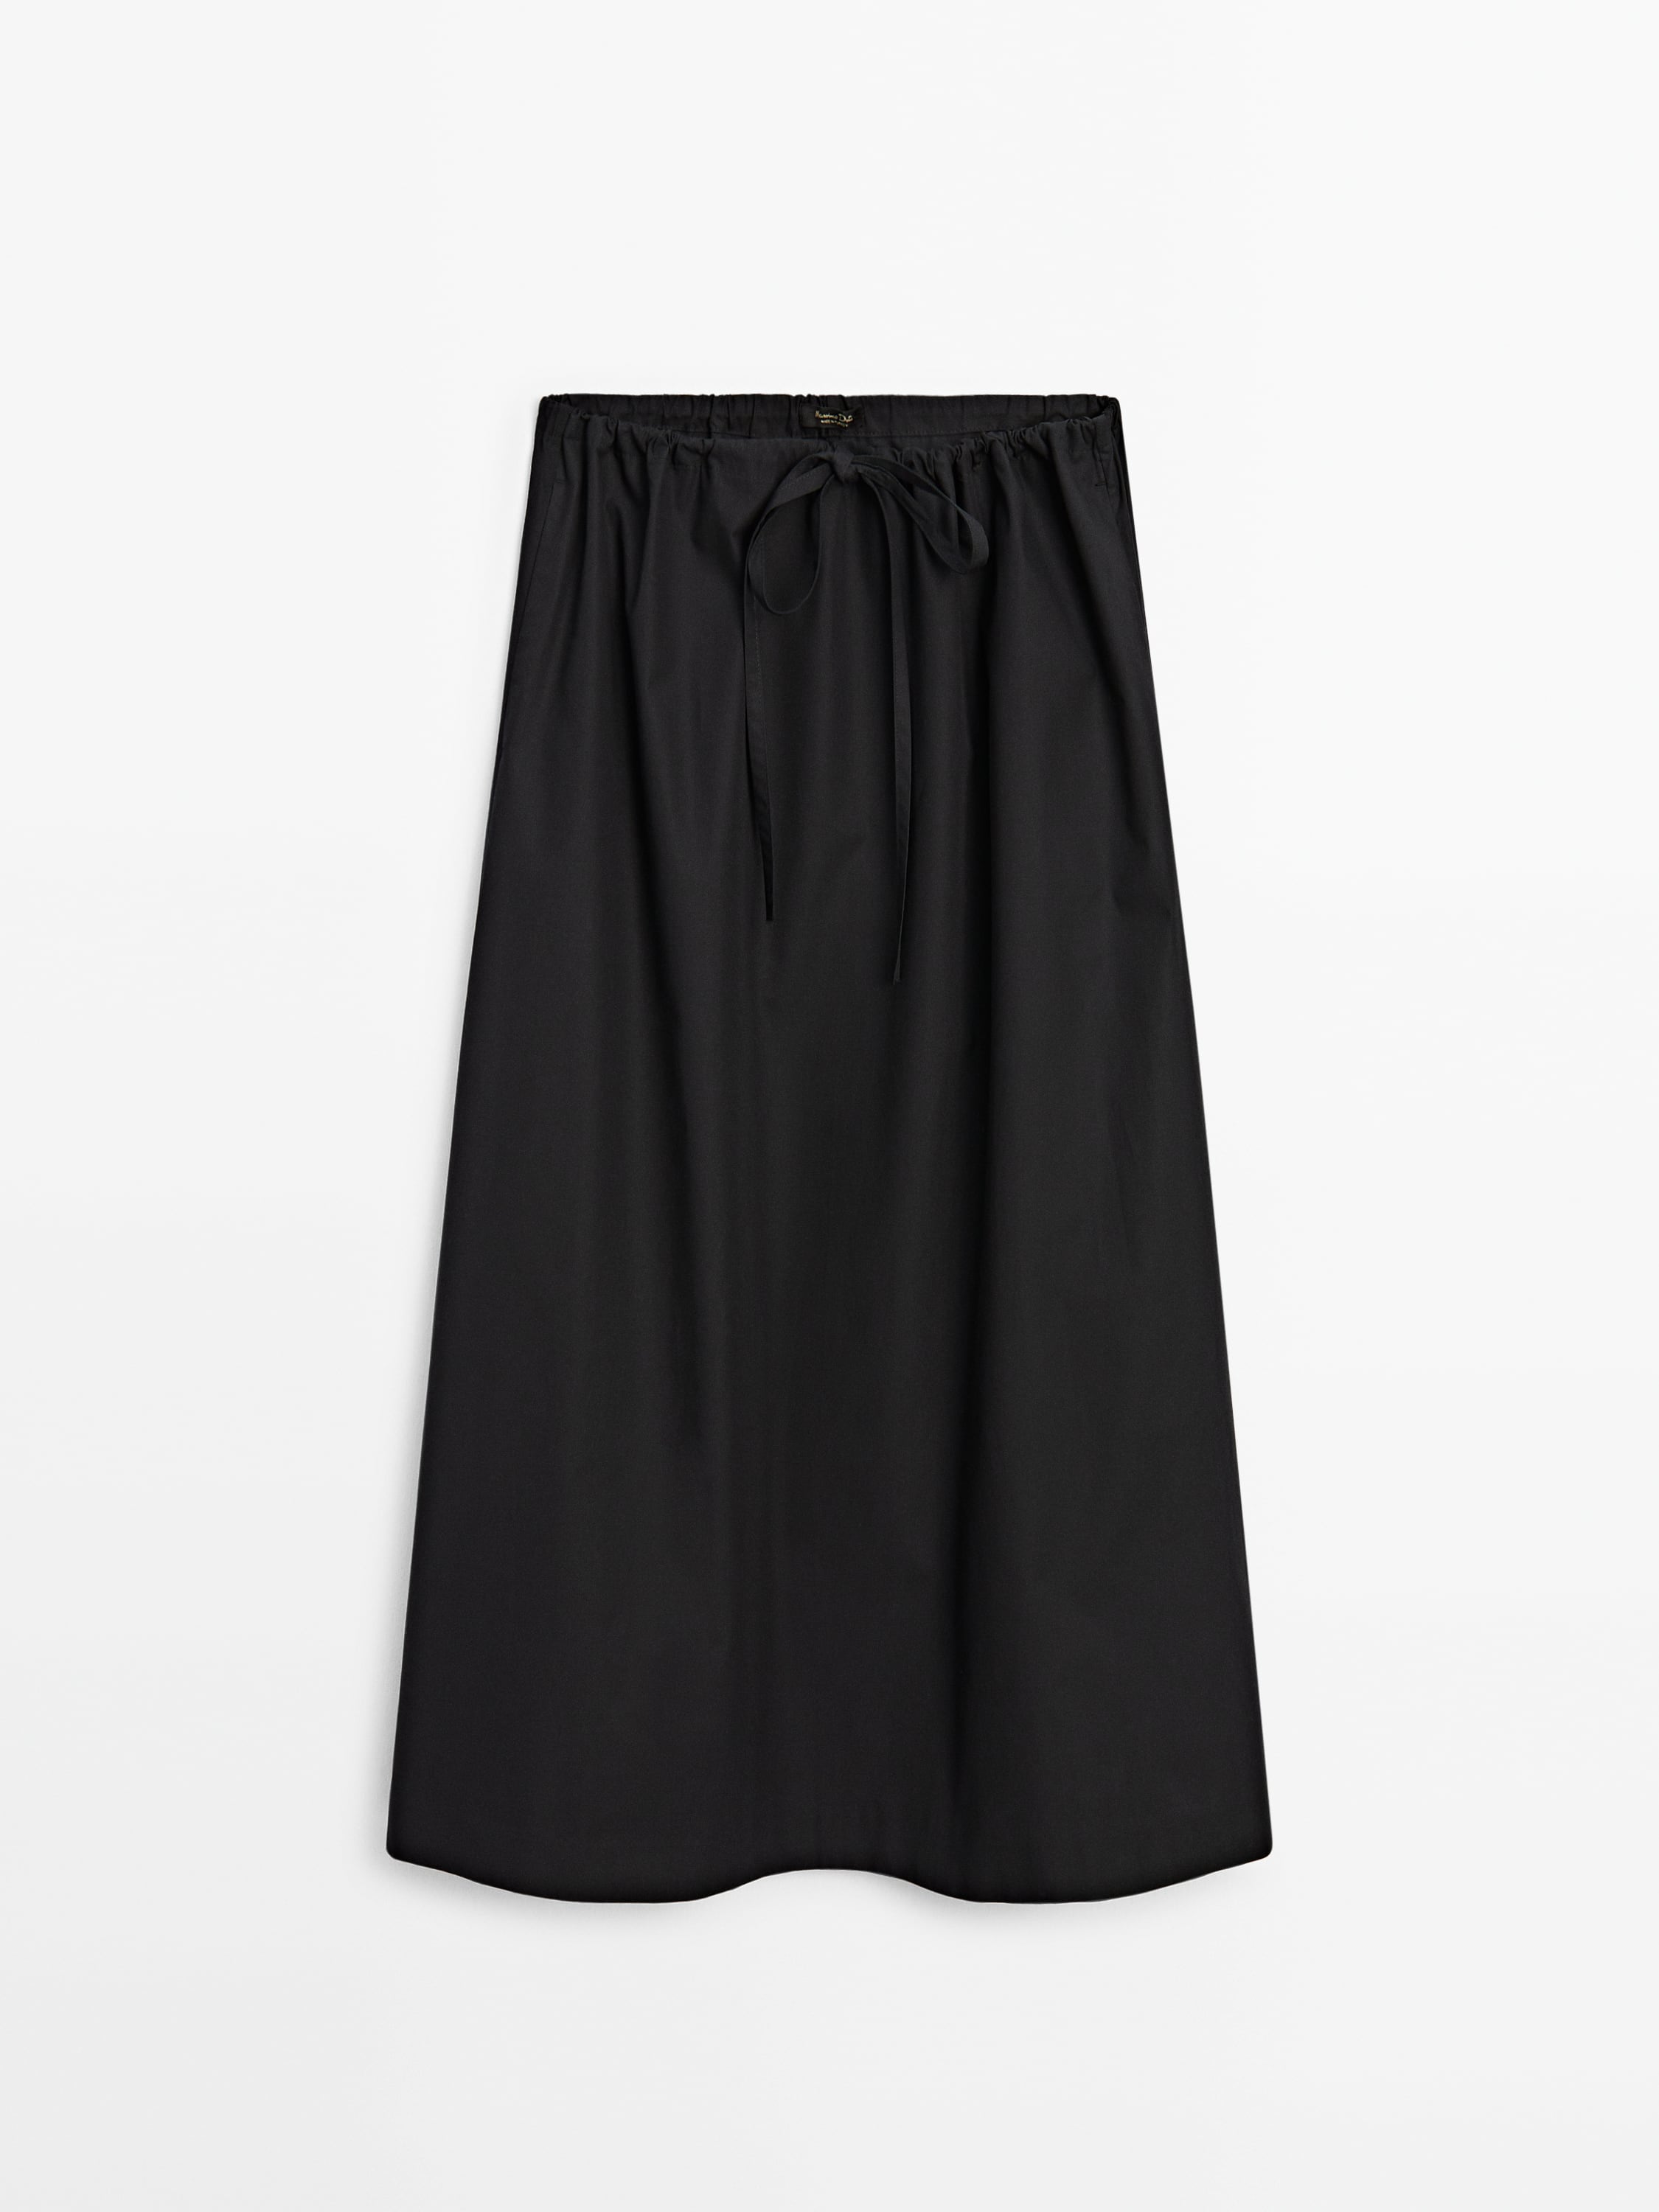 100% cotton poplin skirt